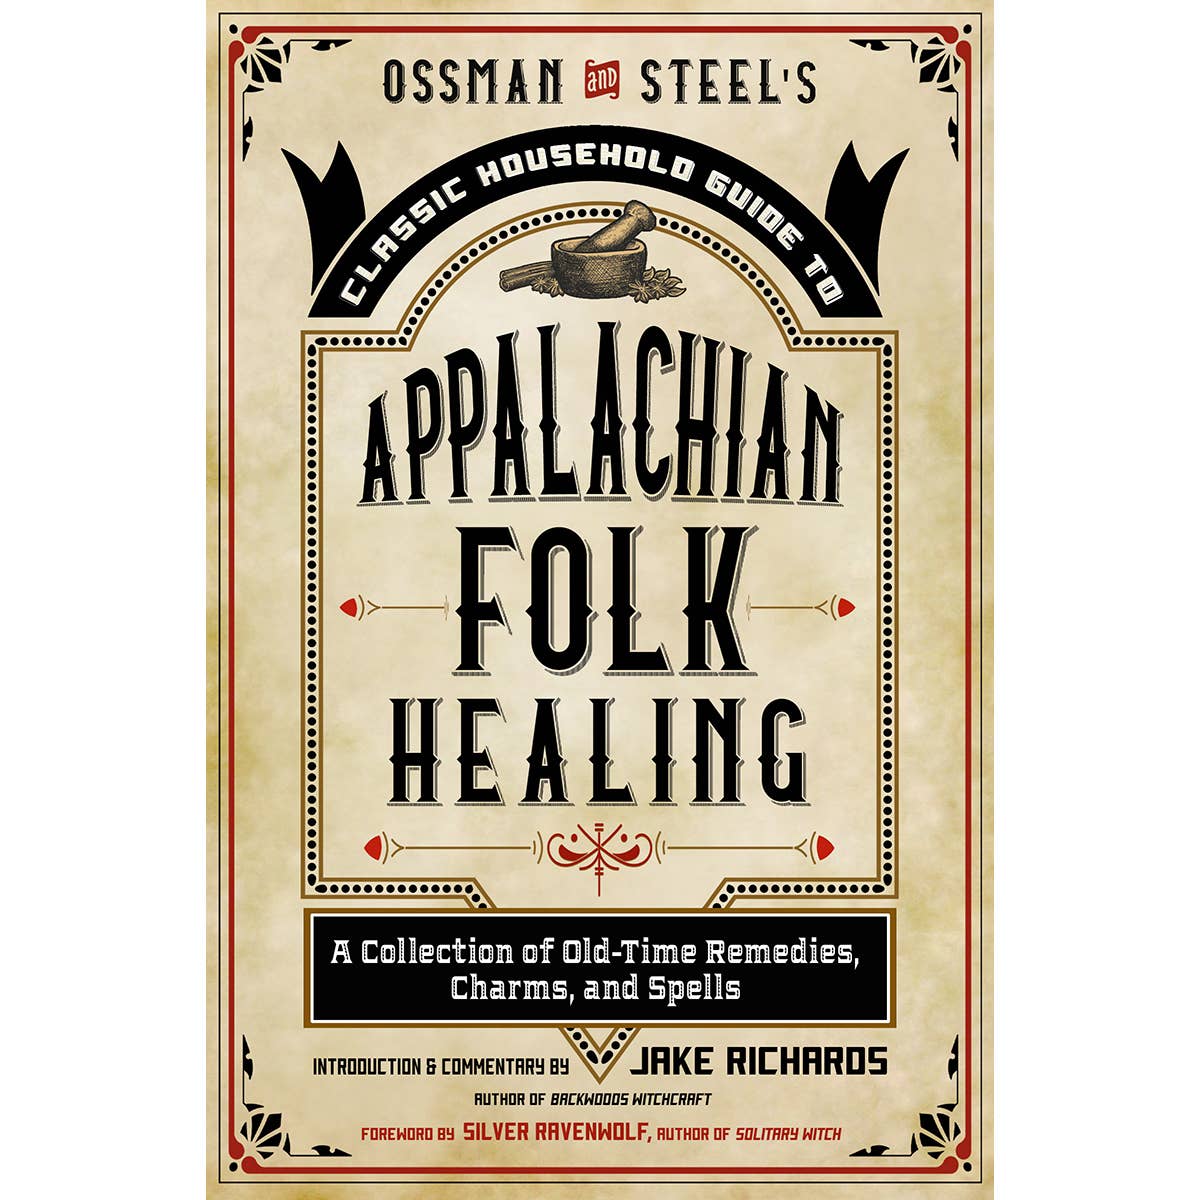 Ossman & Steel's Classic Household Guide to Appalachian…